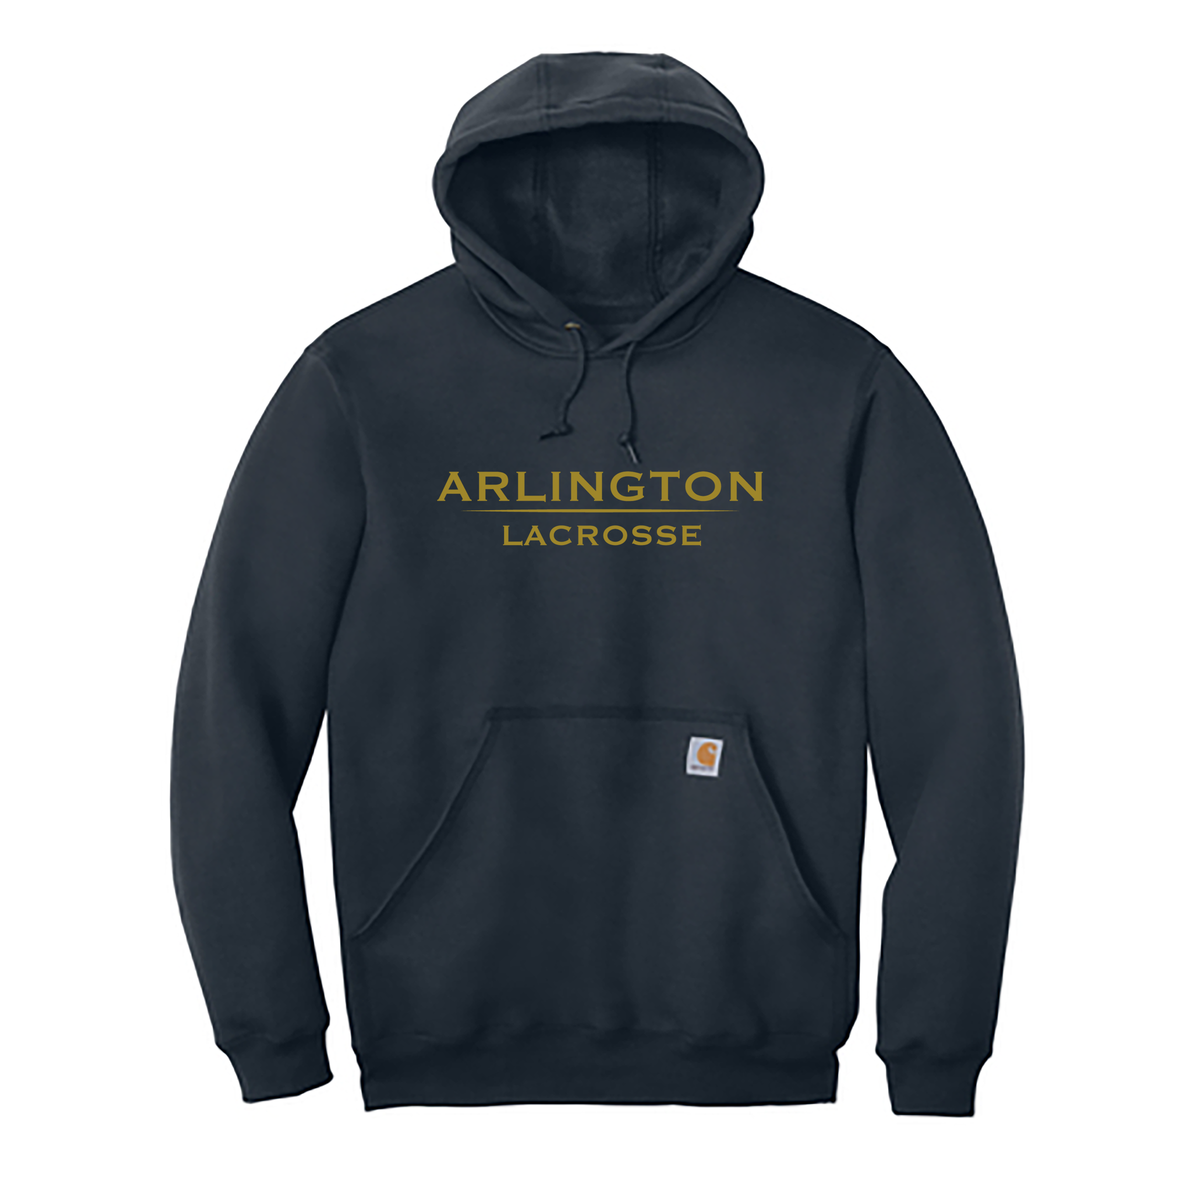 Arlington Lacrosse Carhartt Midweight Hooded Sweatshirt